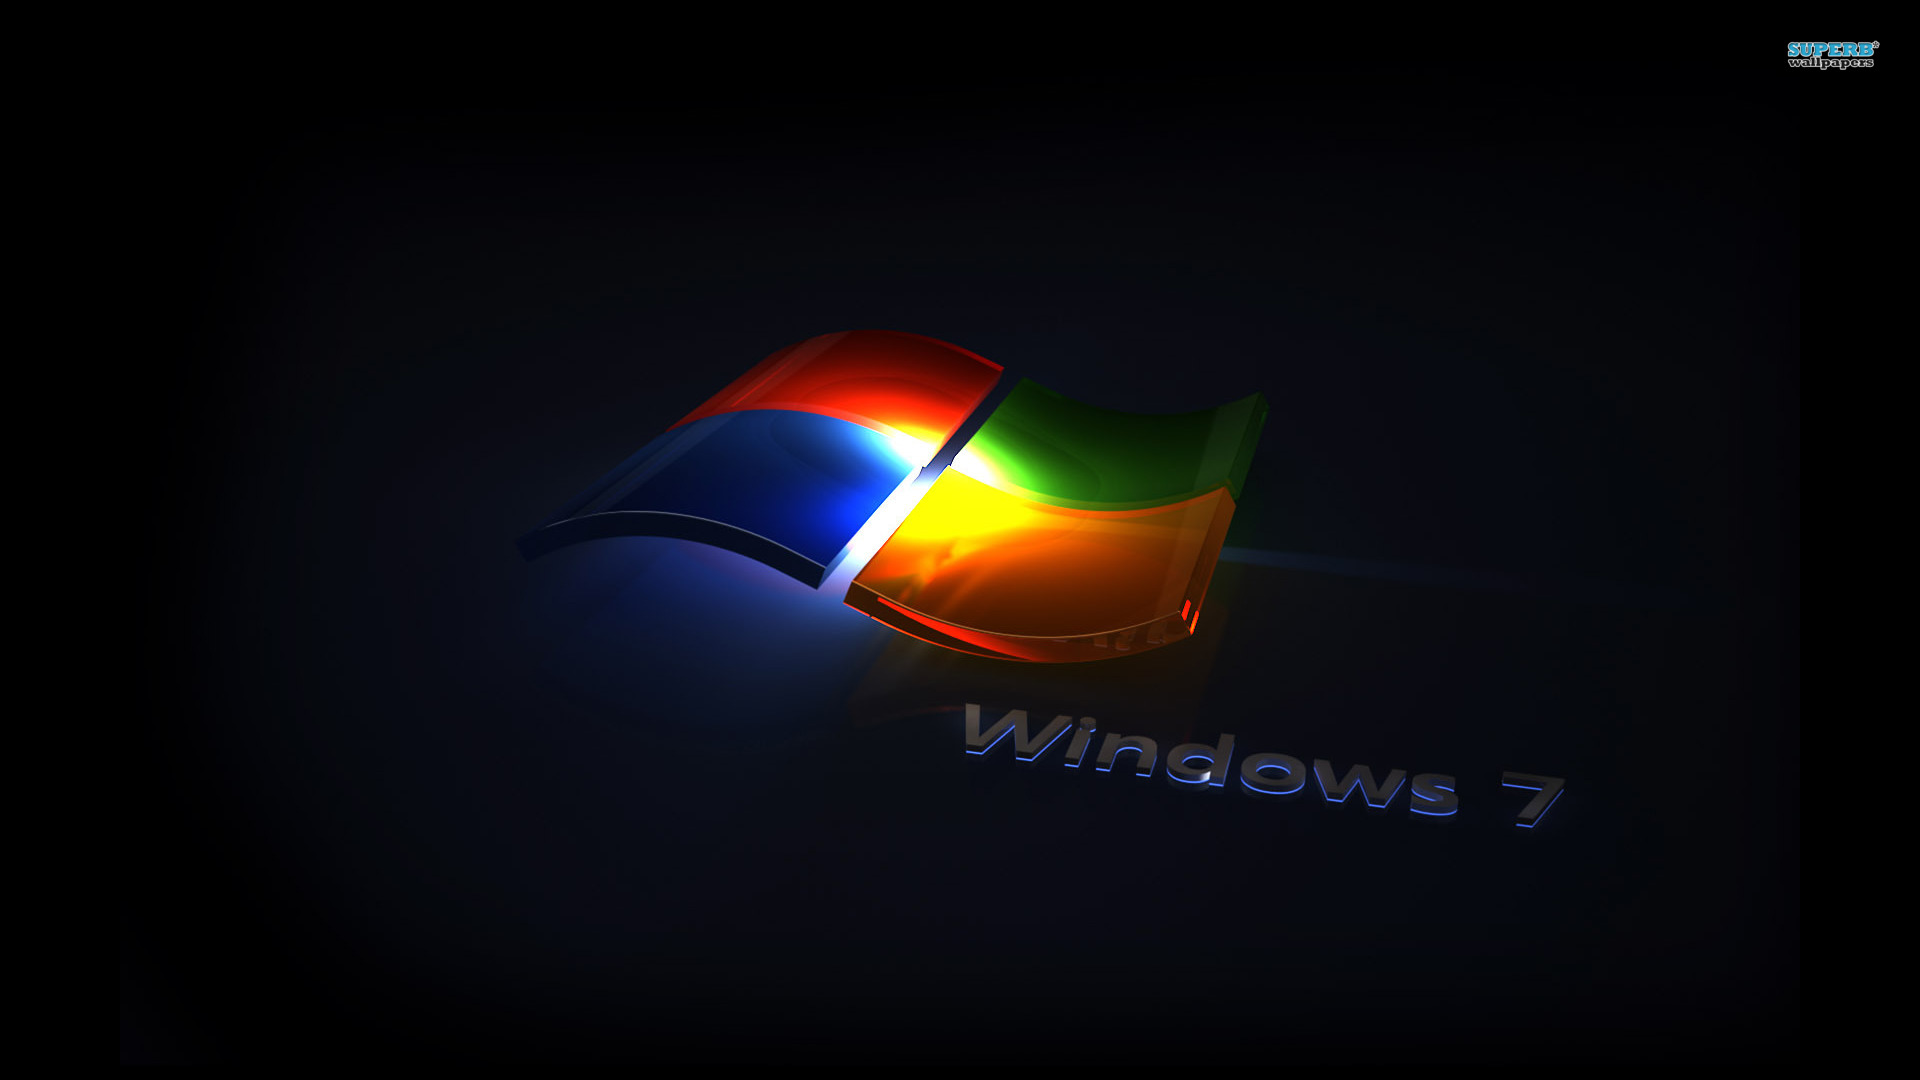 [49+] Windows 7 Wallpaper 1280x800 | WallpaperSafari.com